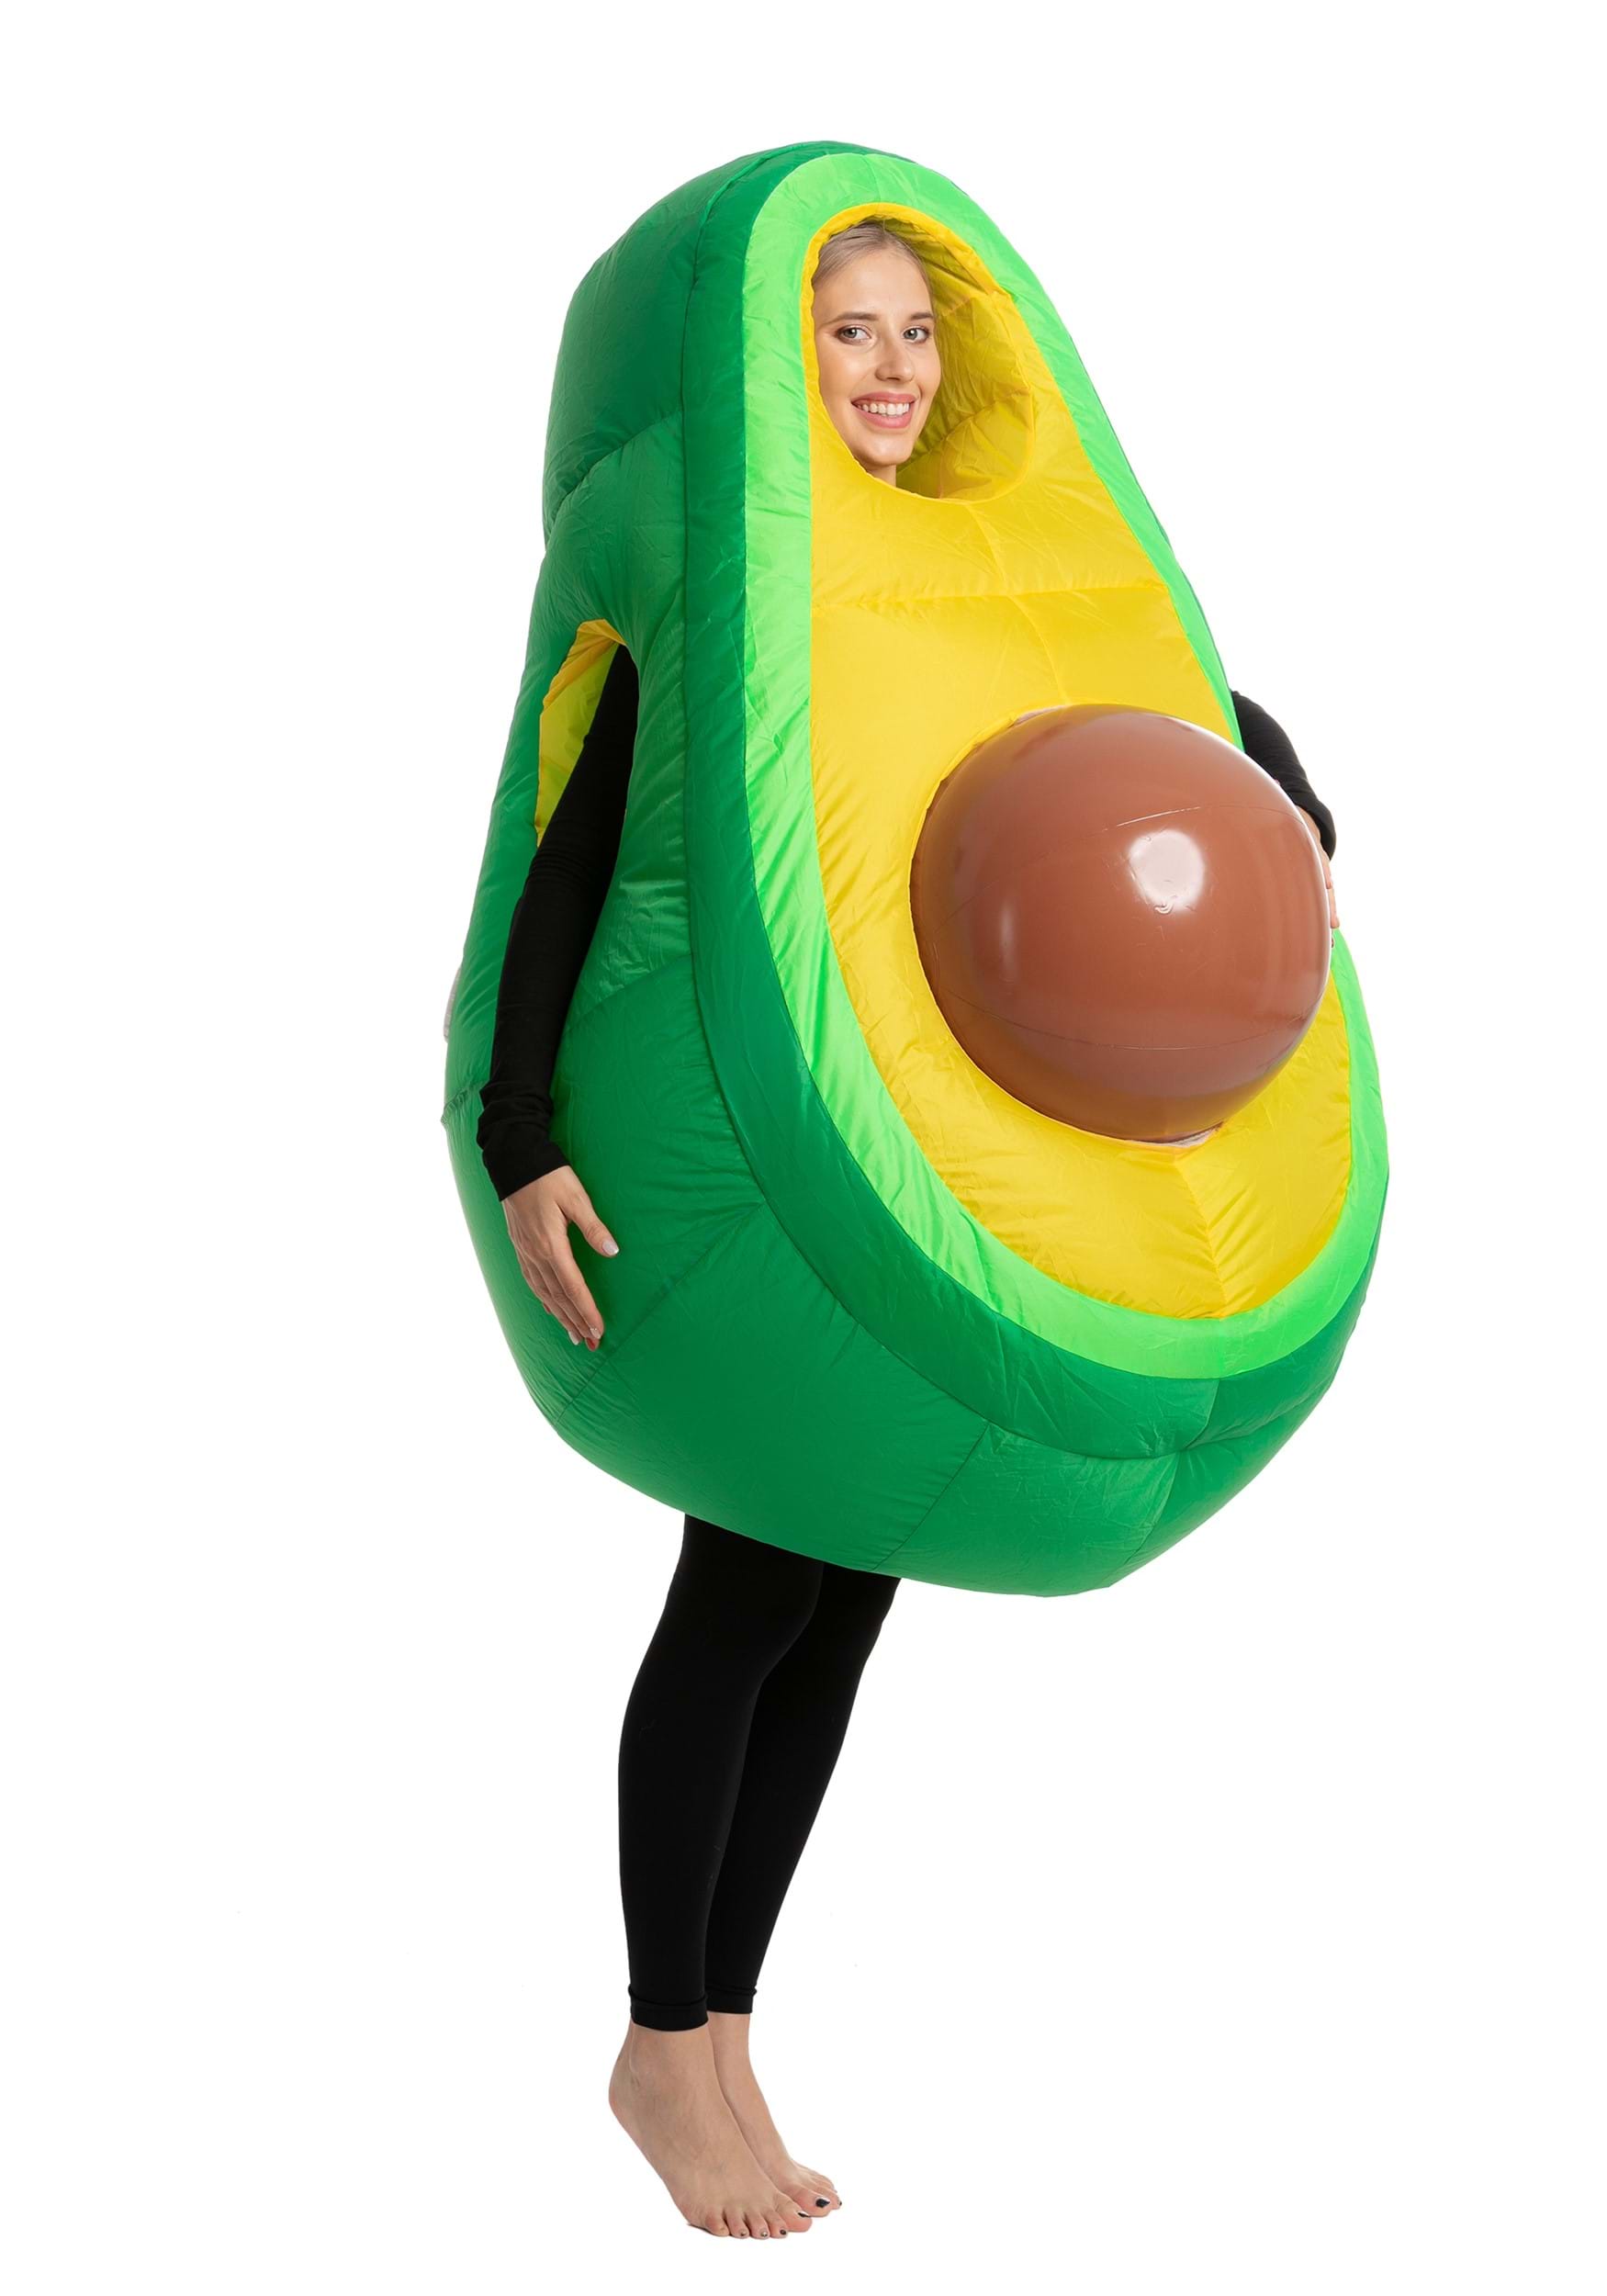 Photos - Fancy Dress Joyin Inflatable Avocado Adult Costume Green/Yellow